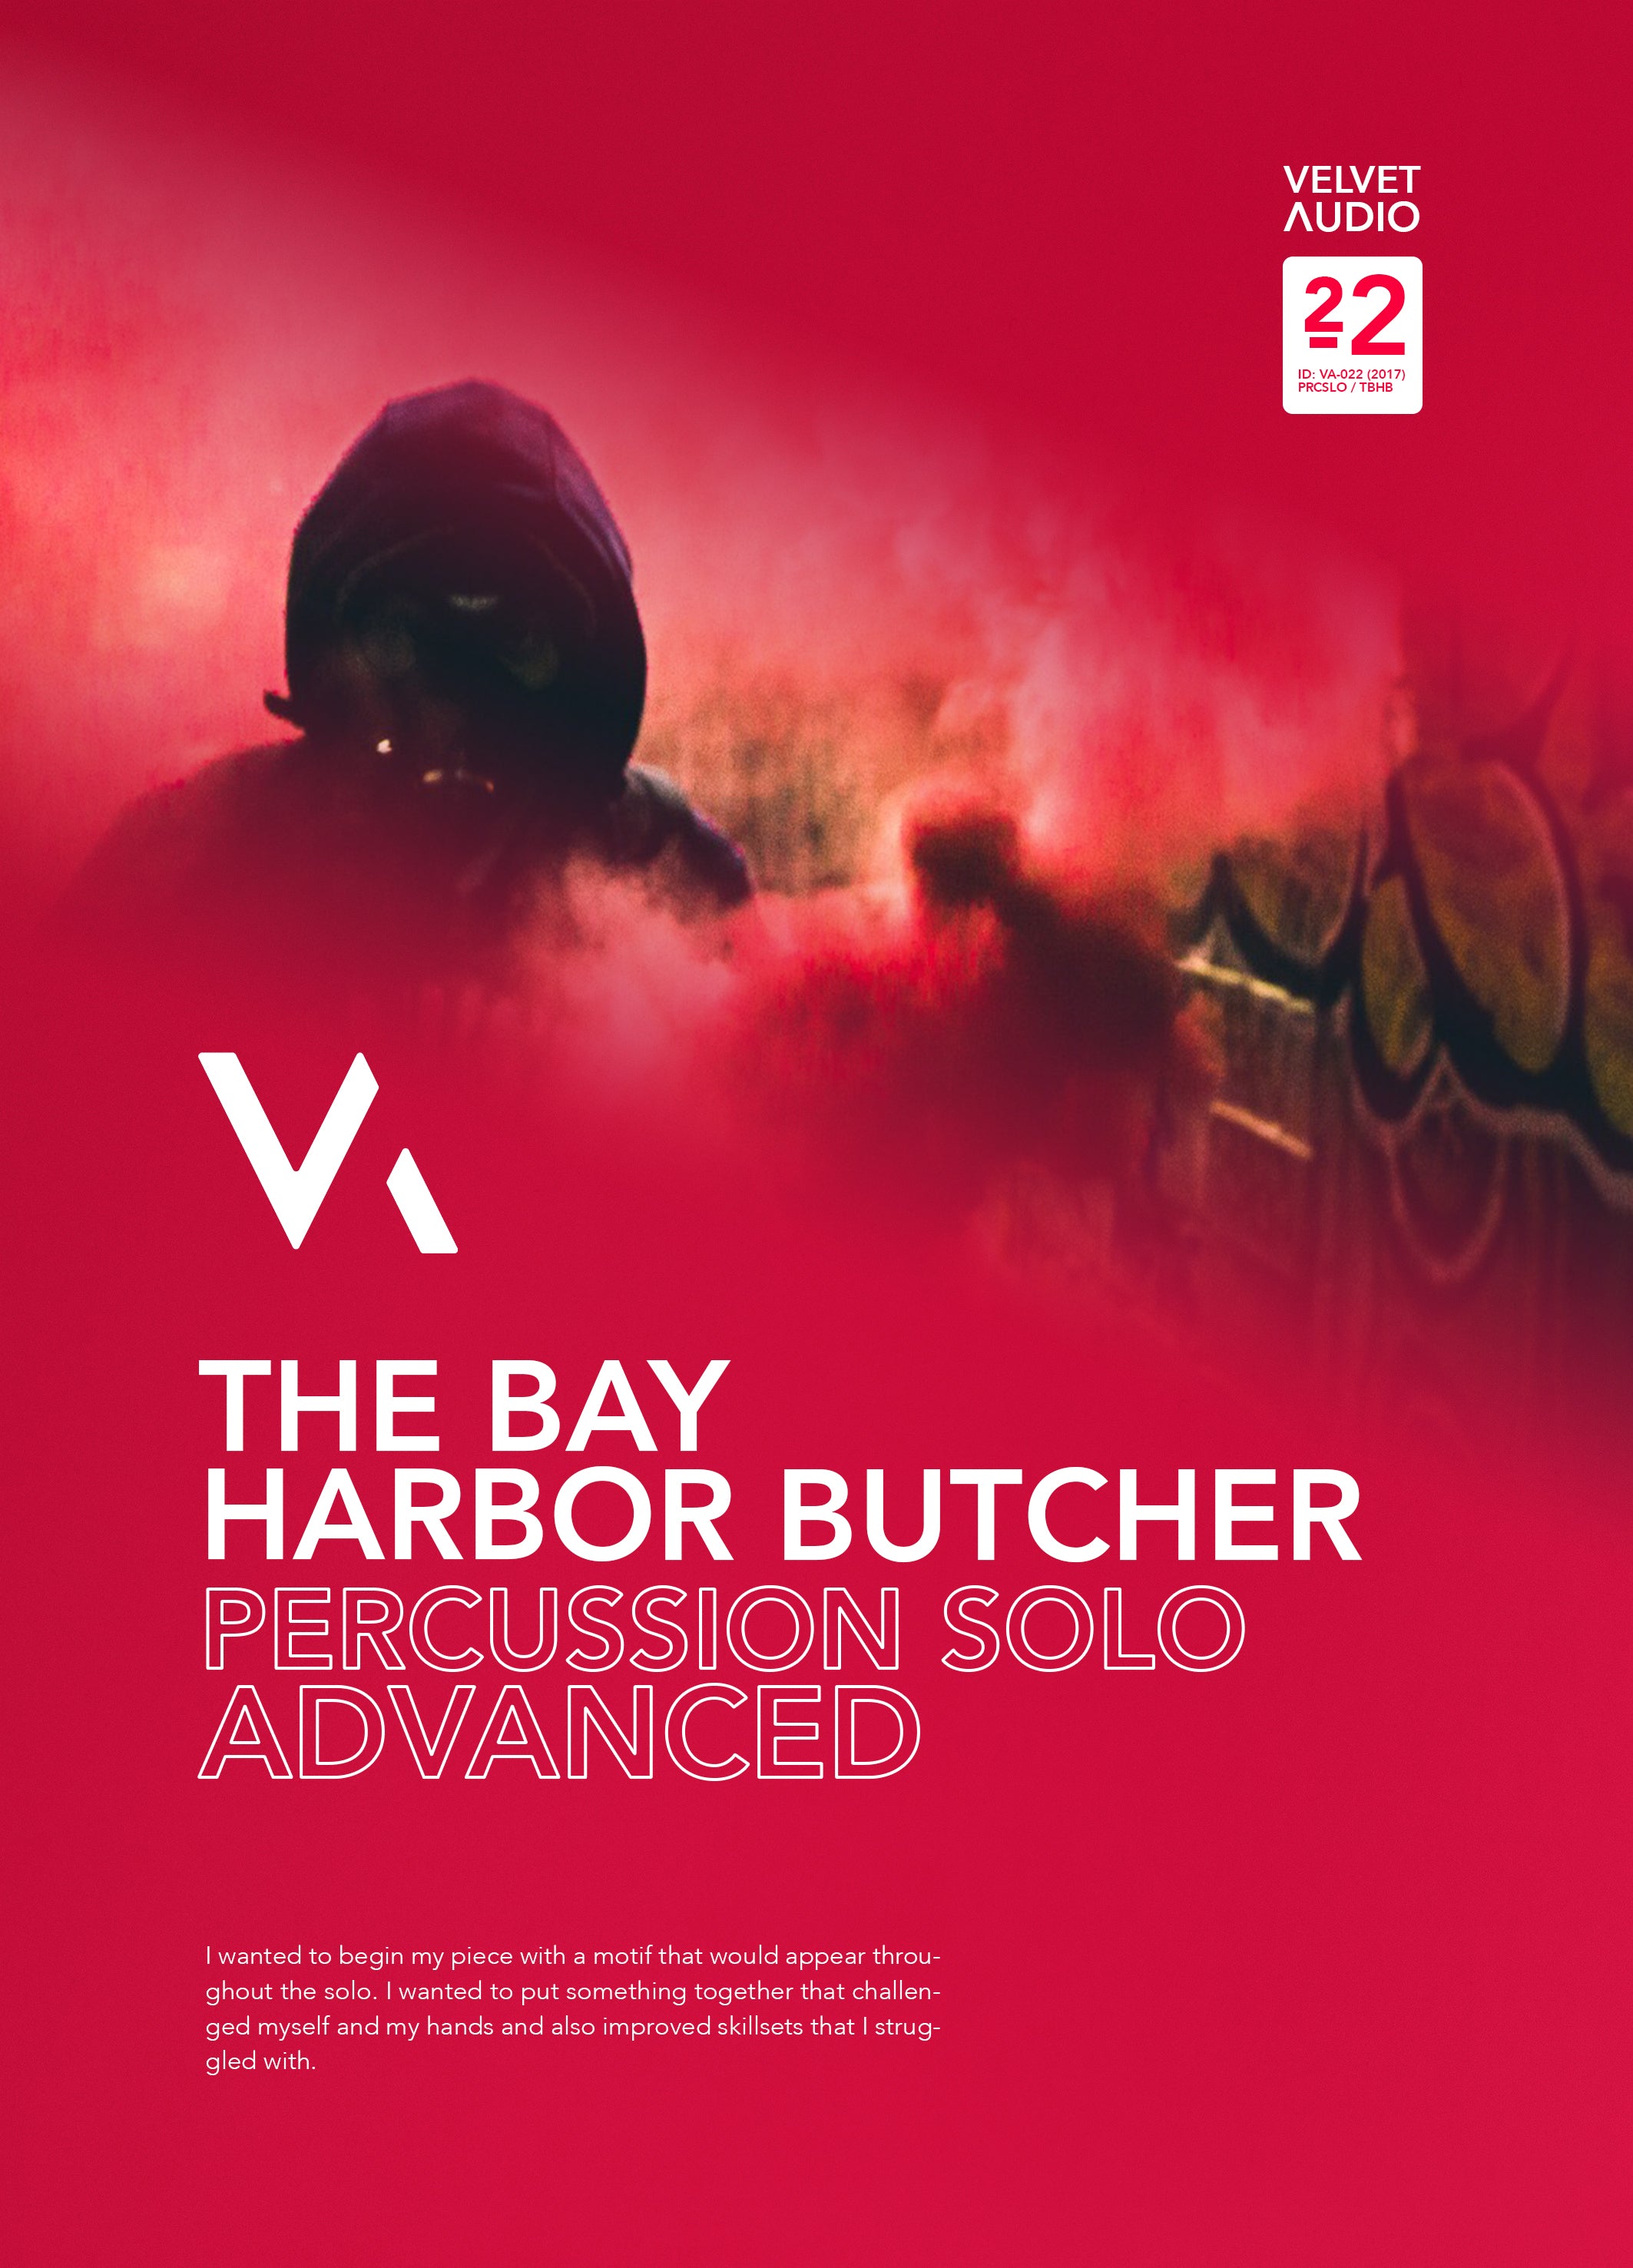 The Bay Harbor Butcher